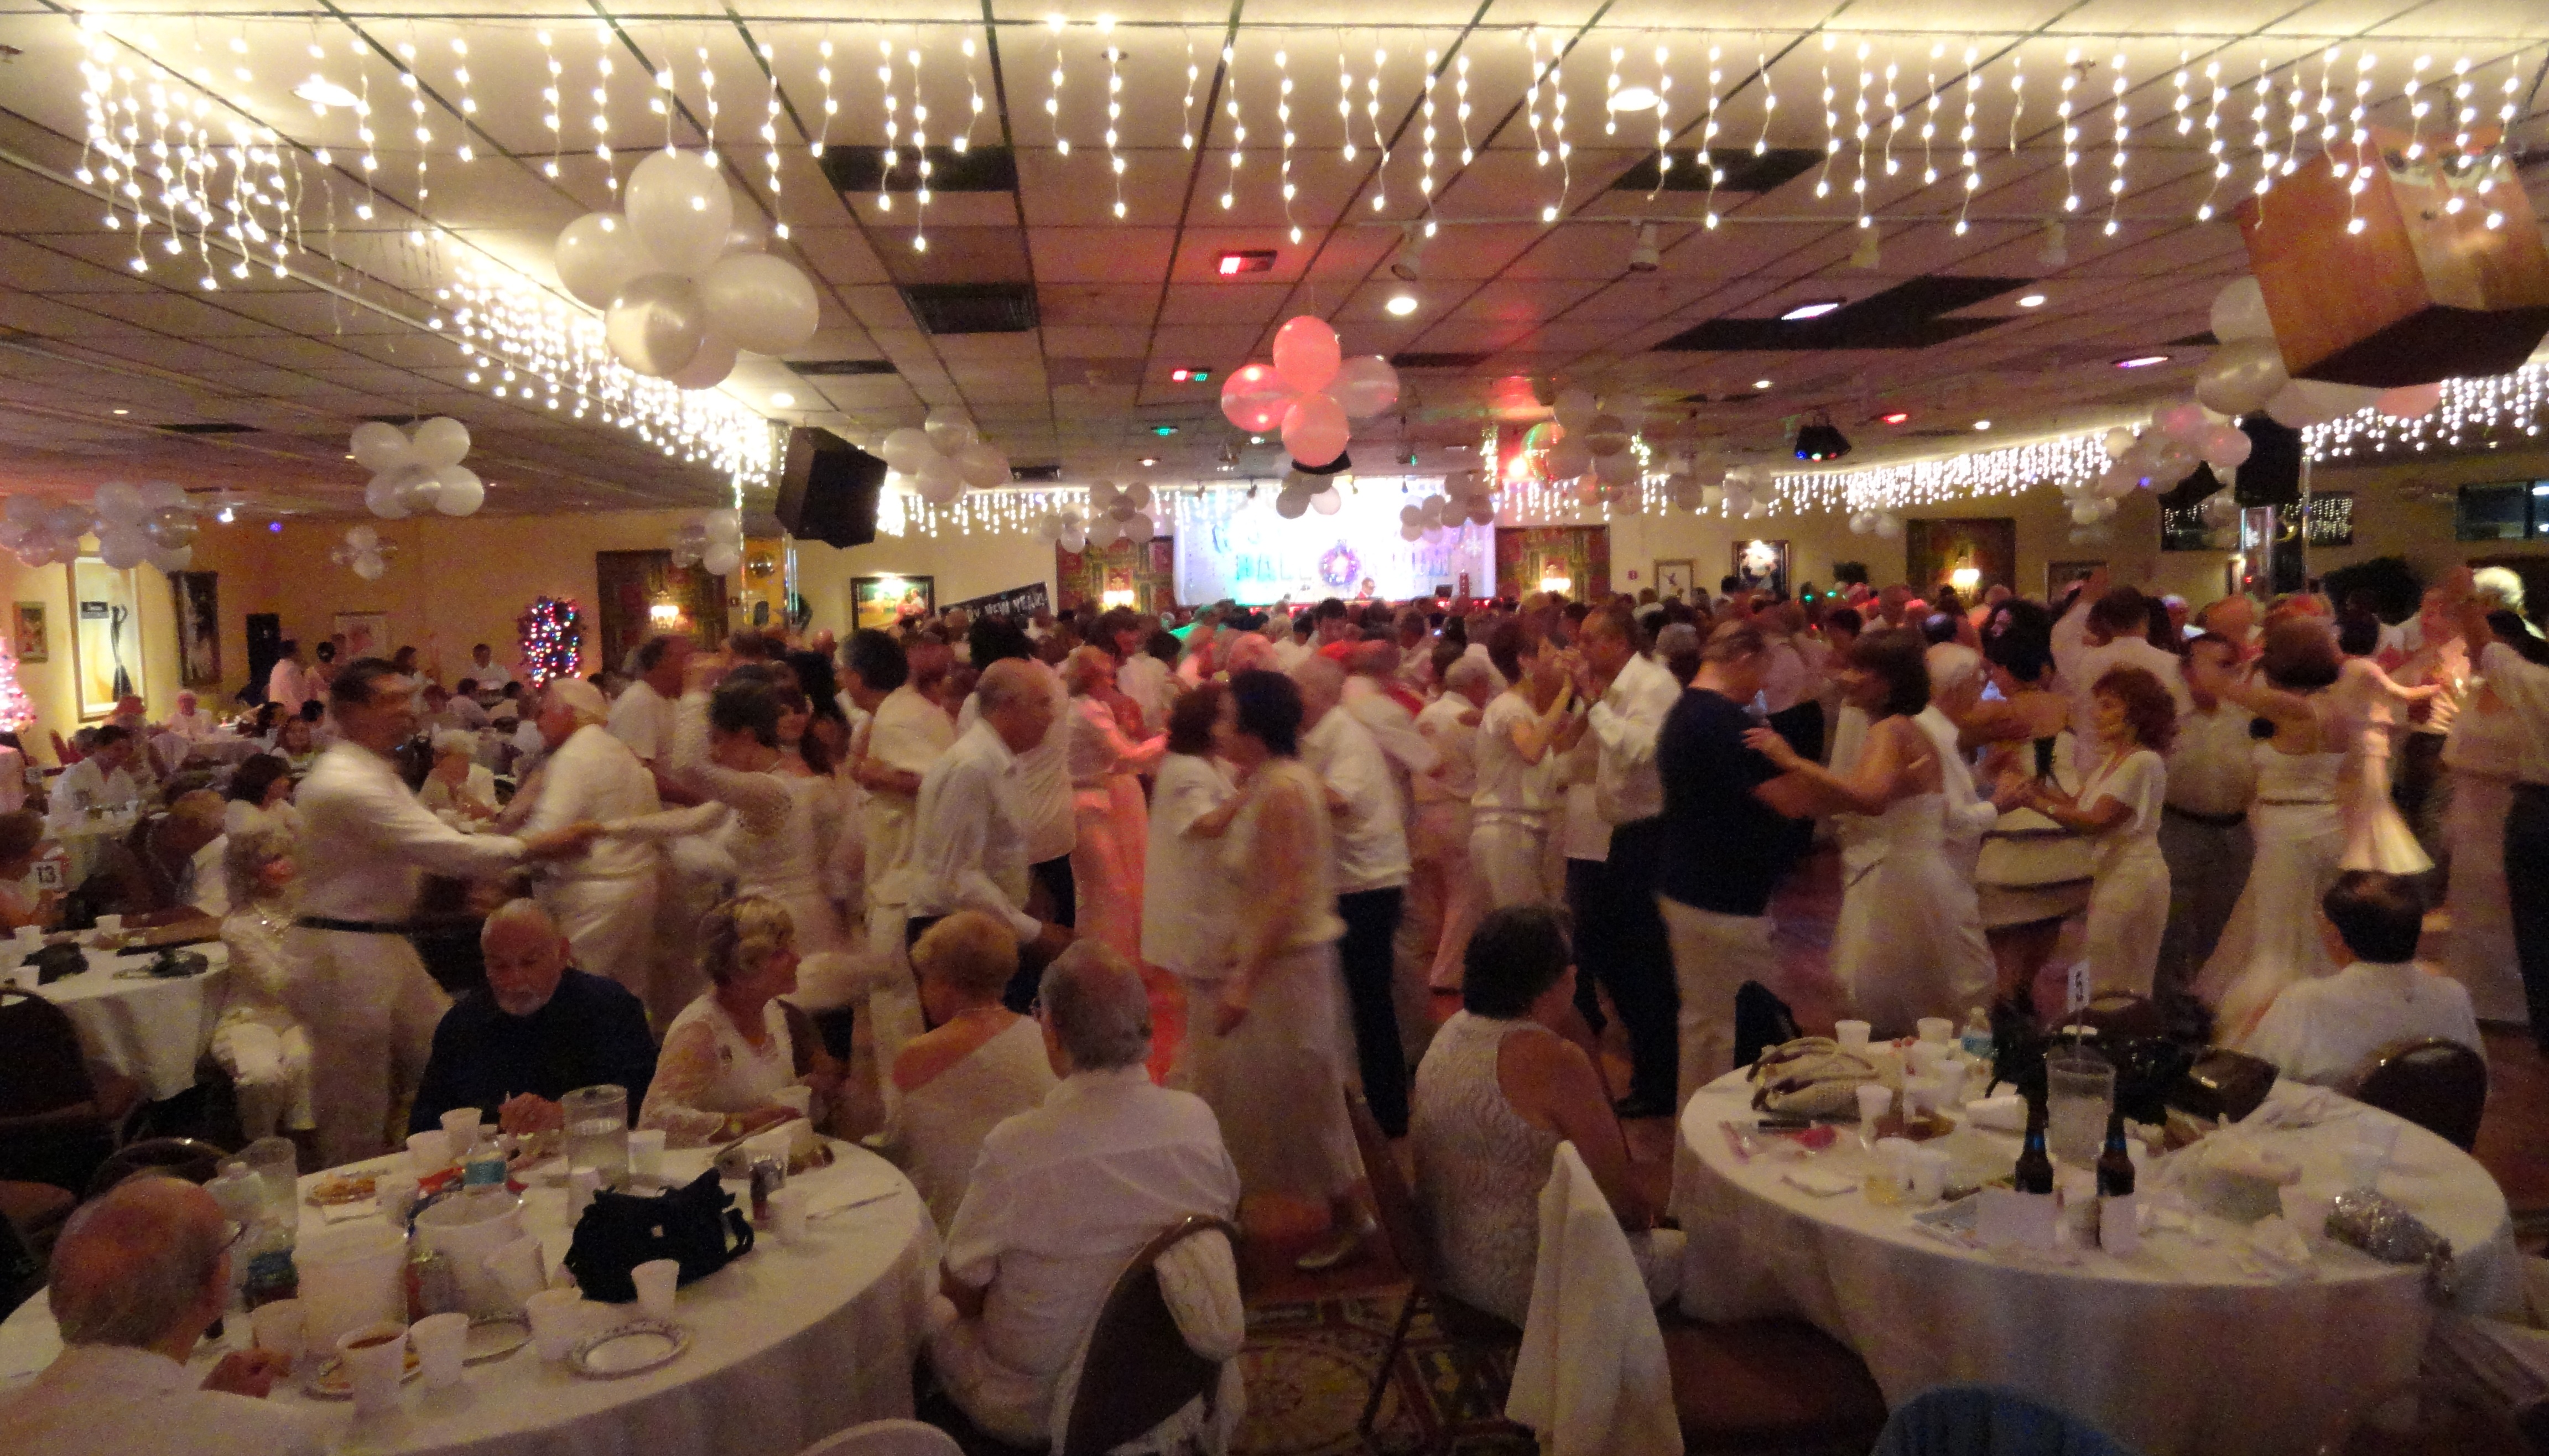 Goldcoast Ballroom 16th Anniversary White Party - December 25, 2013